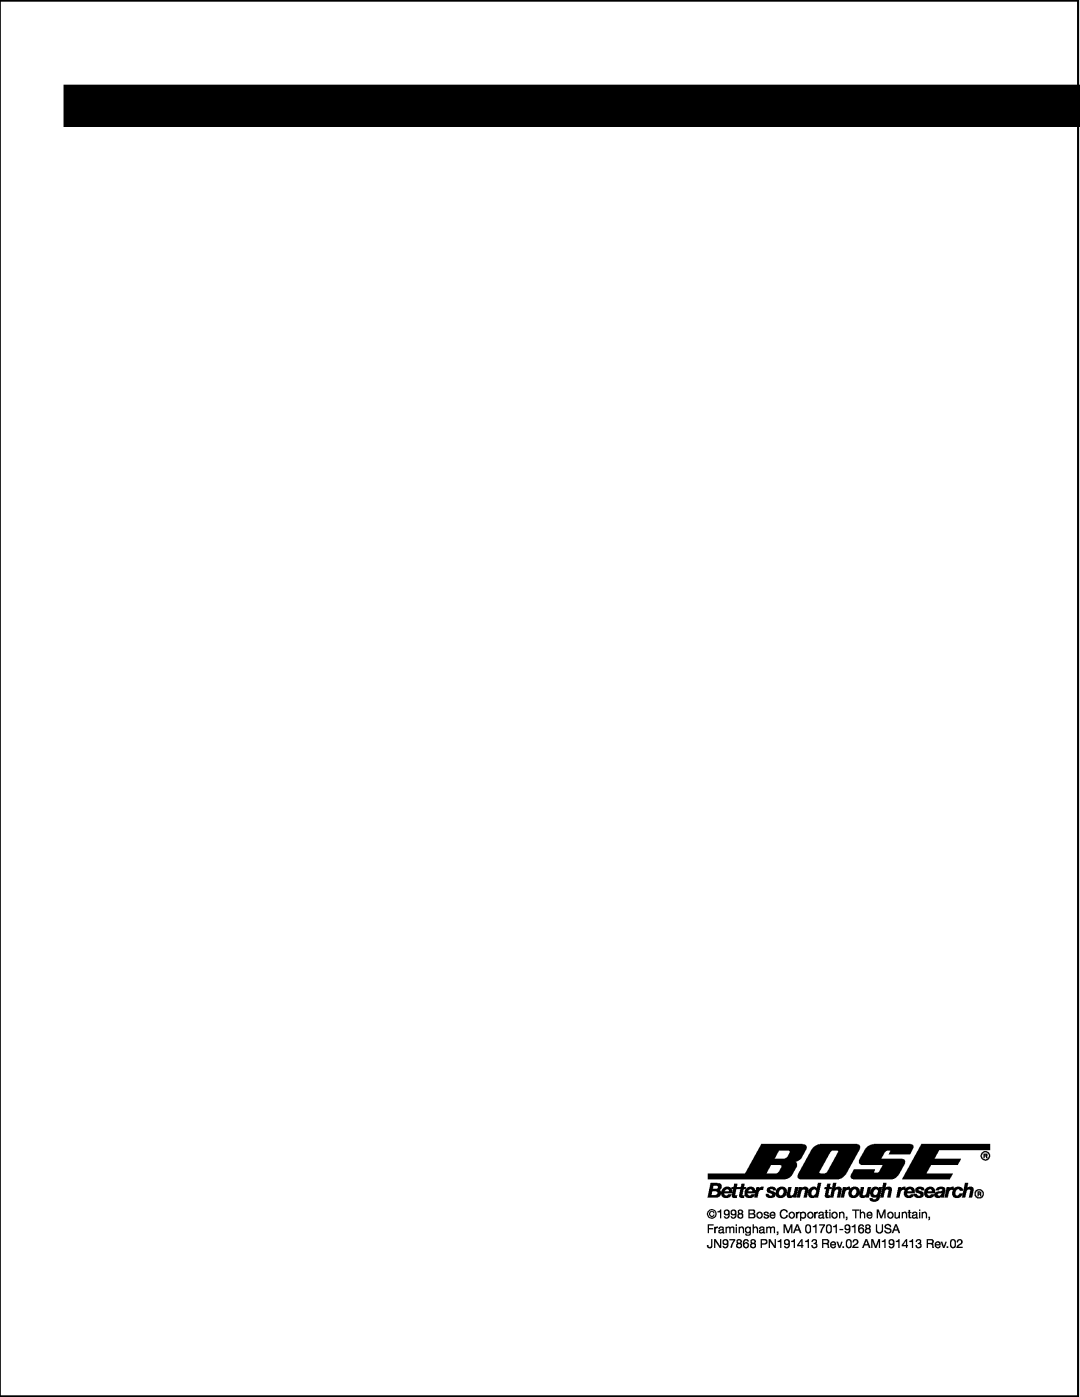 Bose 5 manual Bose Corporation, The Mountain, Framingham, MA 01701-9168USA, JN97868 PN191413 Rev.02 AM191413 Rev.02 